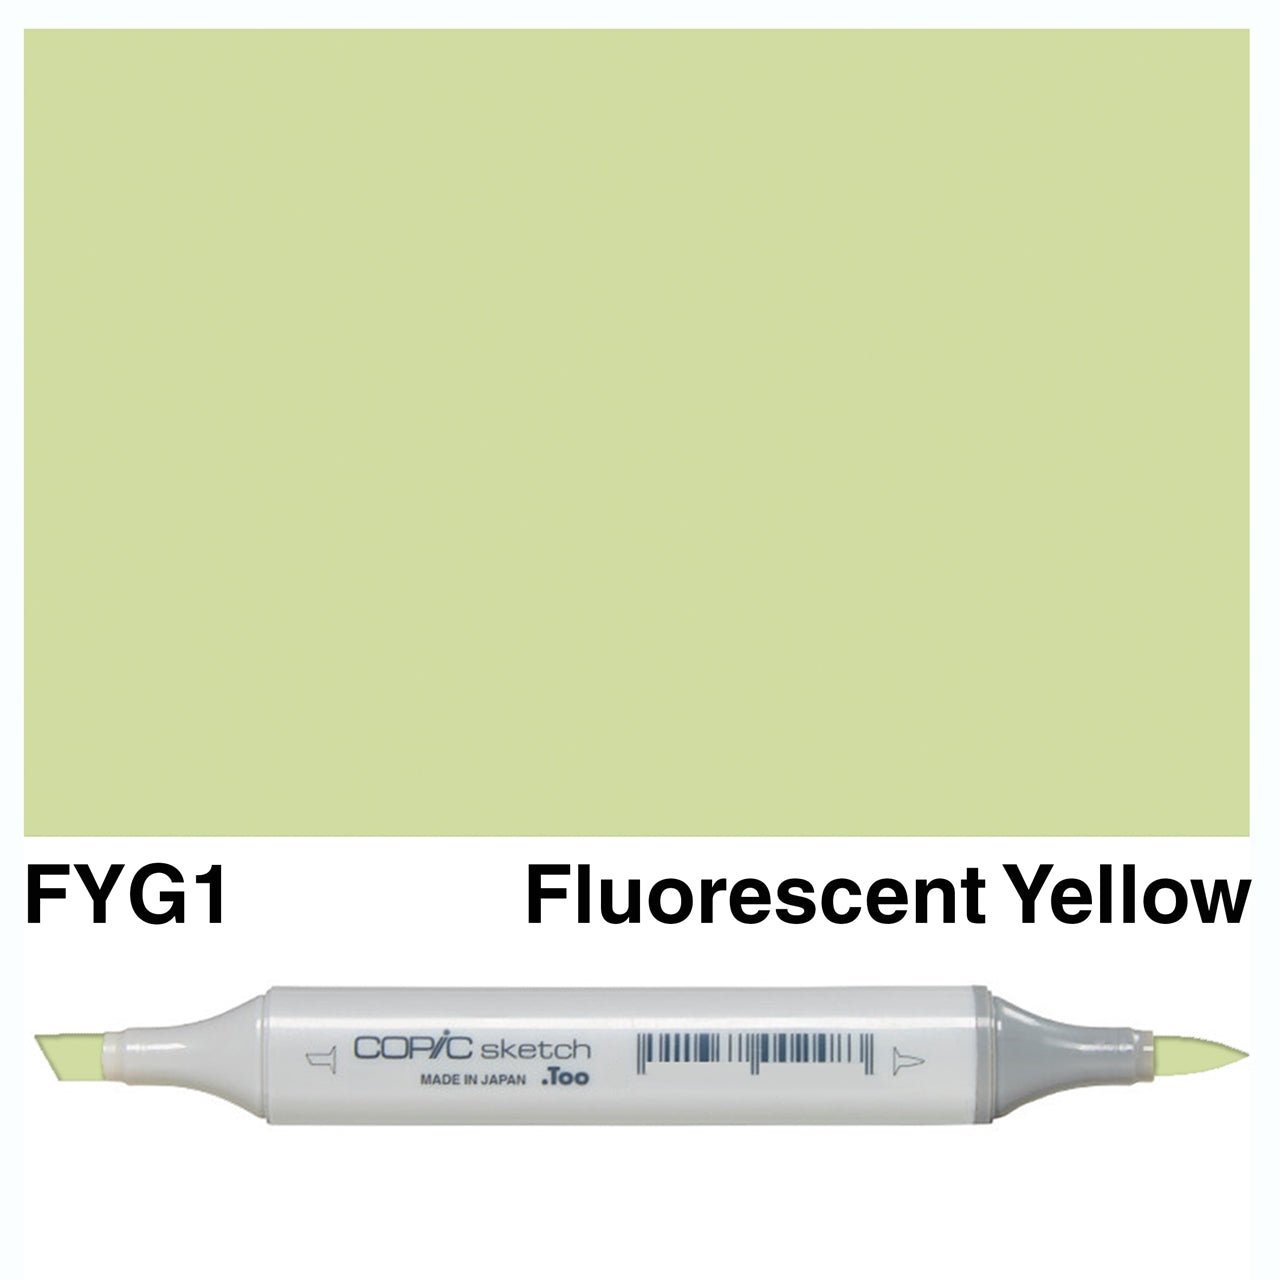 Copic Sketch FYG1 Fluorescent Yellow - theartshop.com.au